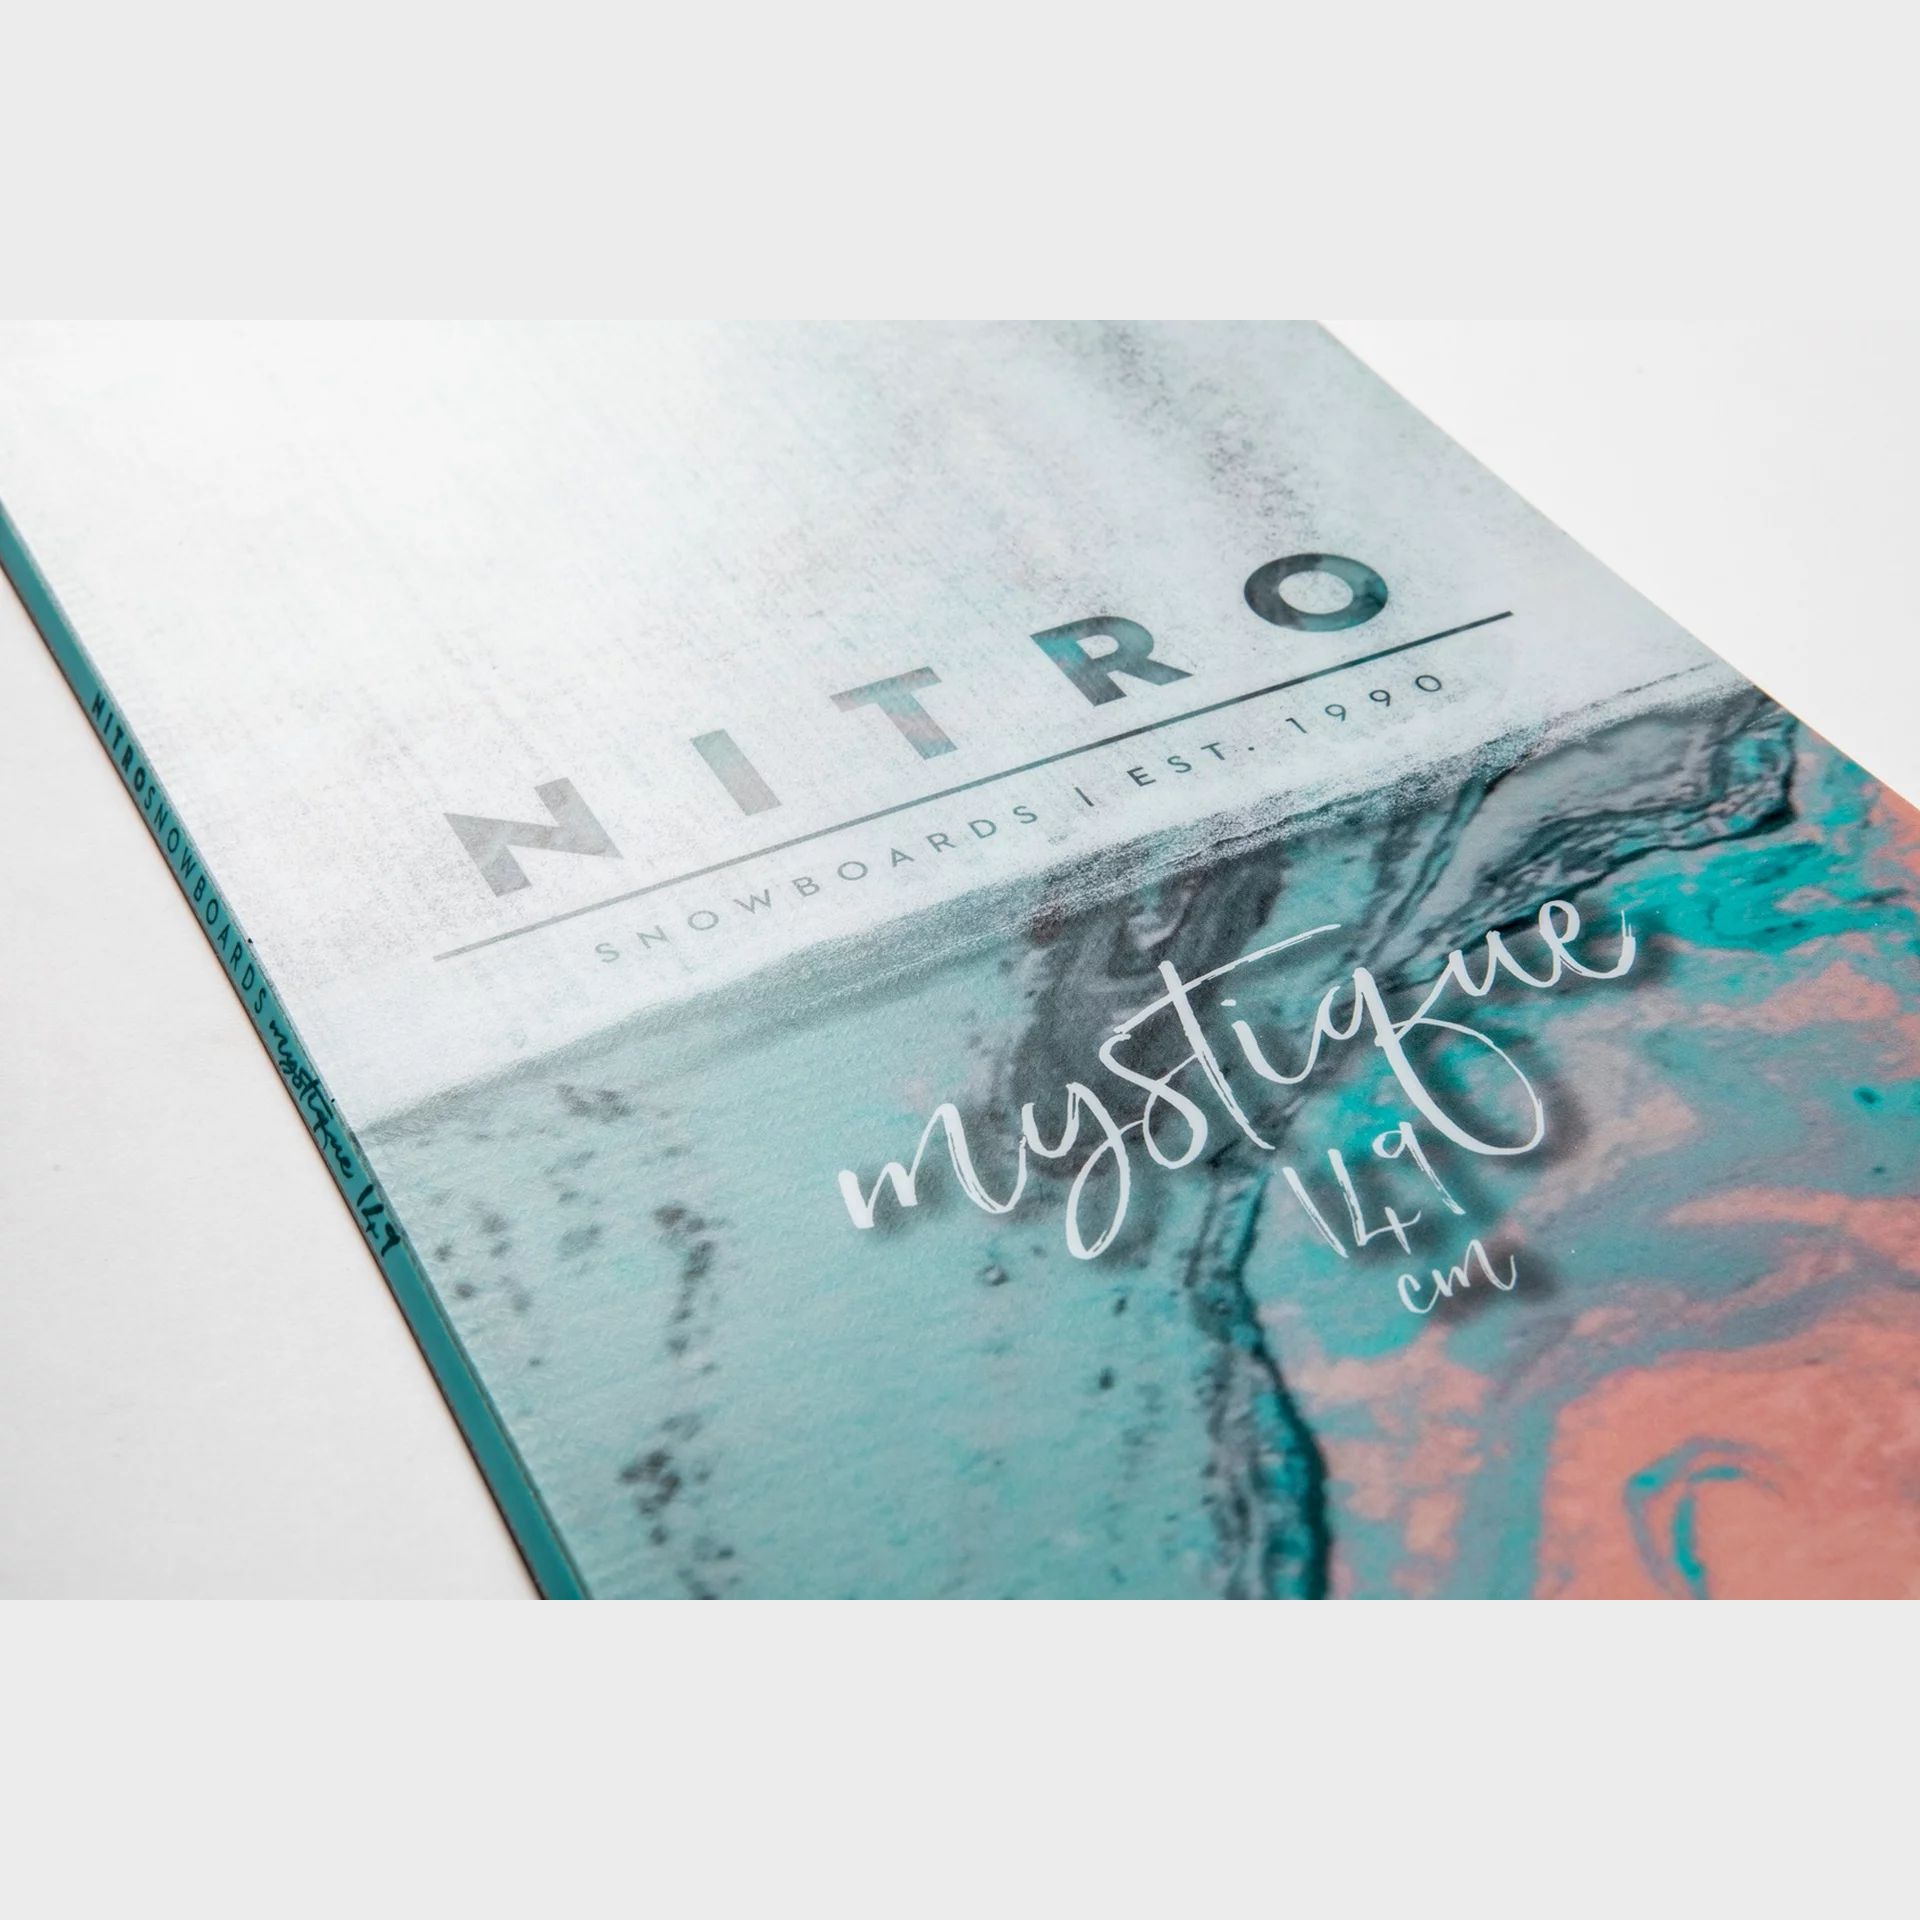 Plăci Snowboard -  nitro Mystique